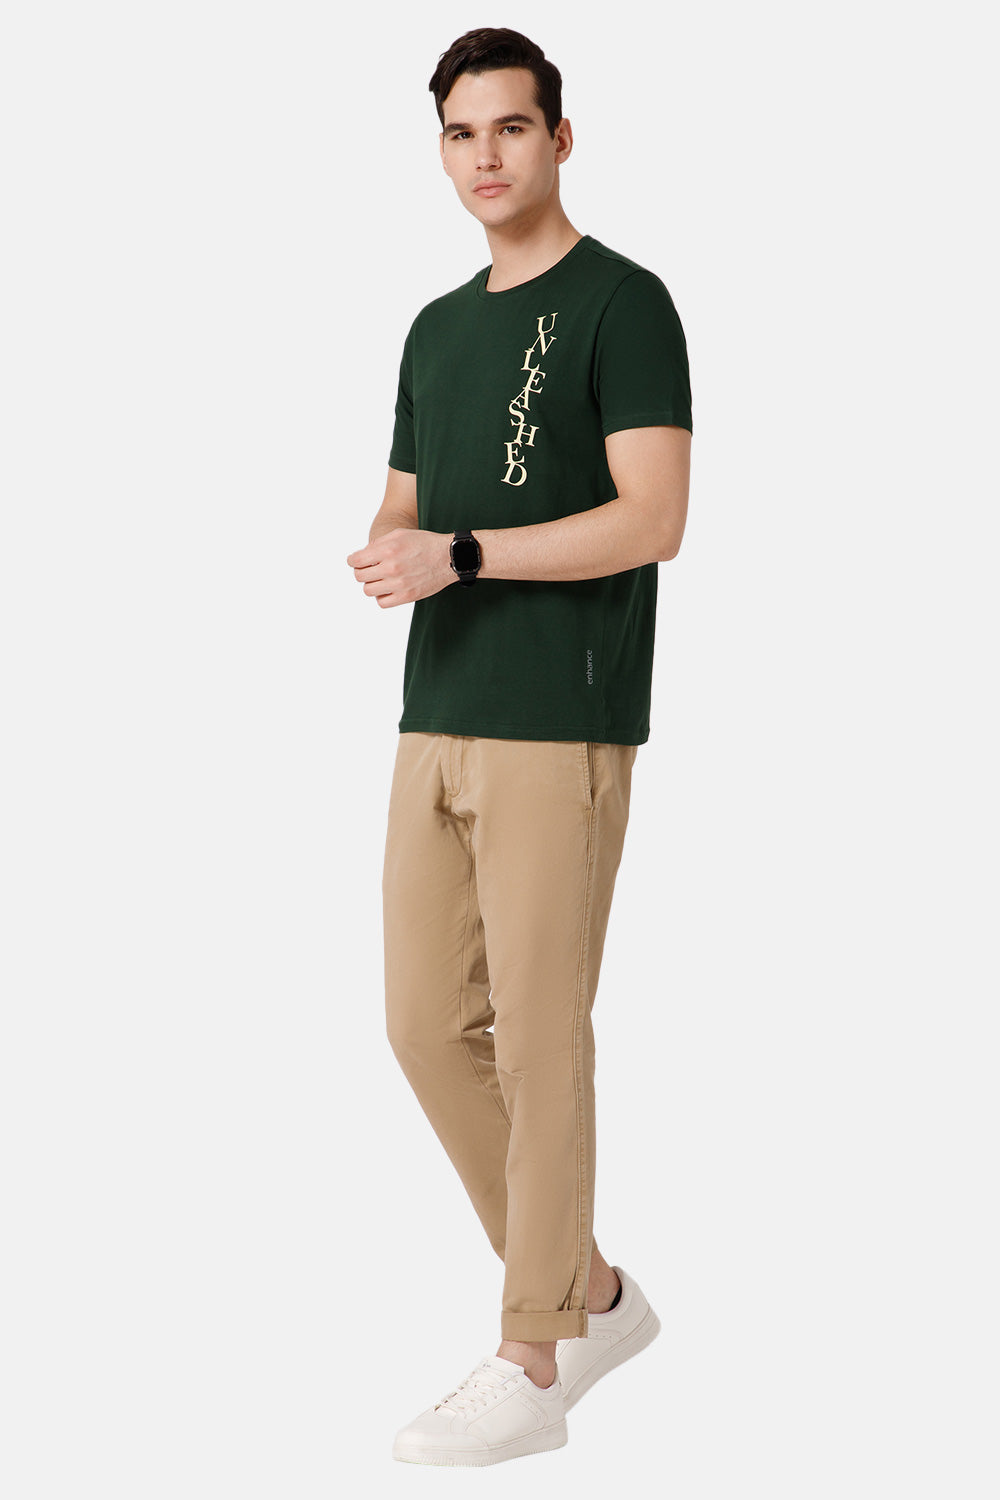 Enhance Printed Crew Neck Men's Casual T-Shirts - Green - TS18